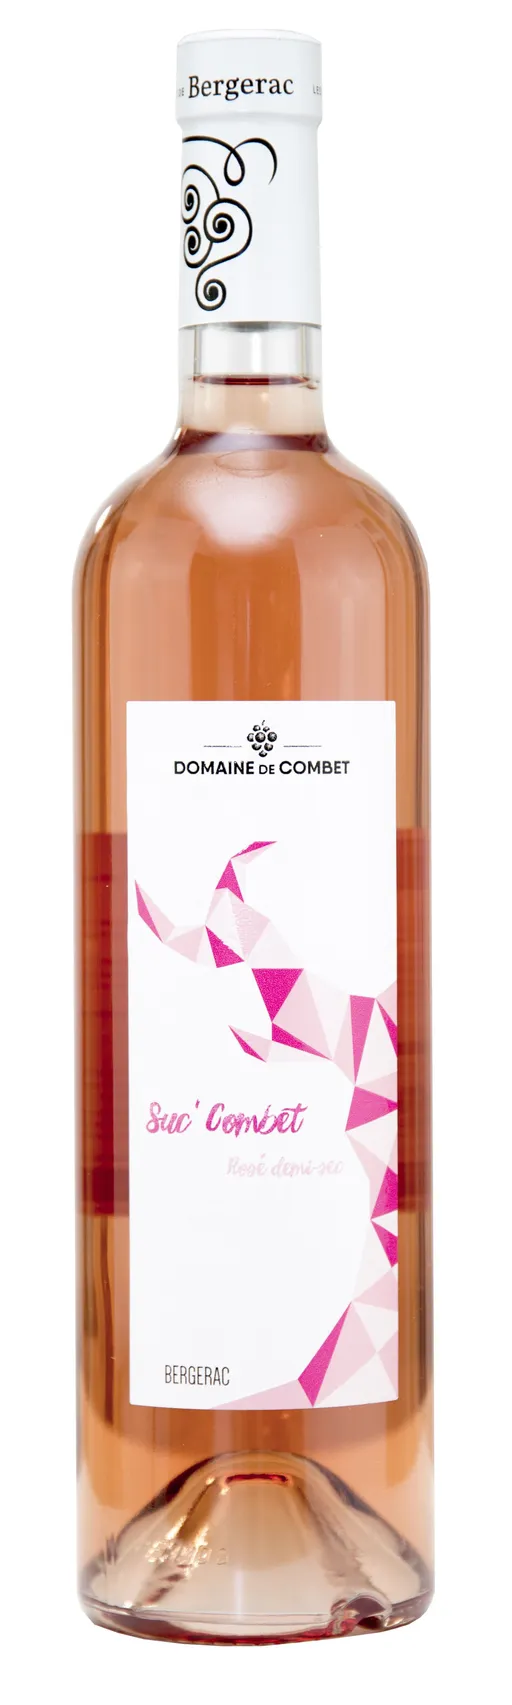 Earl de Combet SUC'COMBET, Rosé, 2021, Bergerac. Bottle image